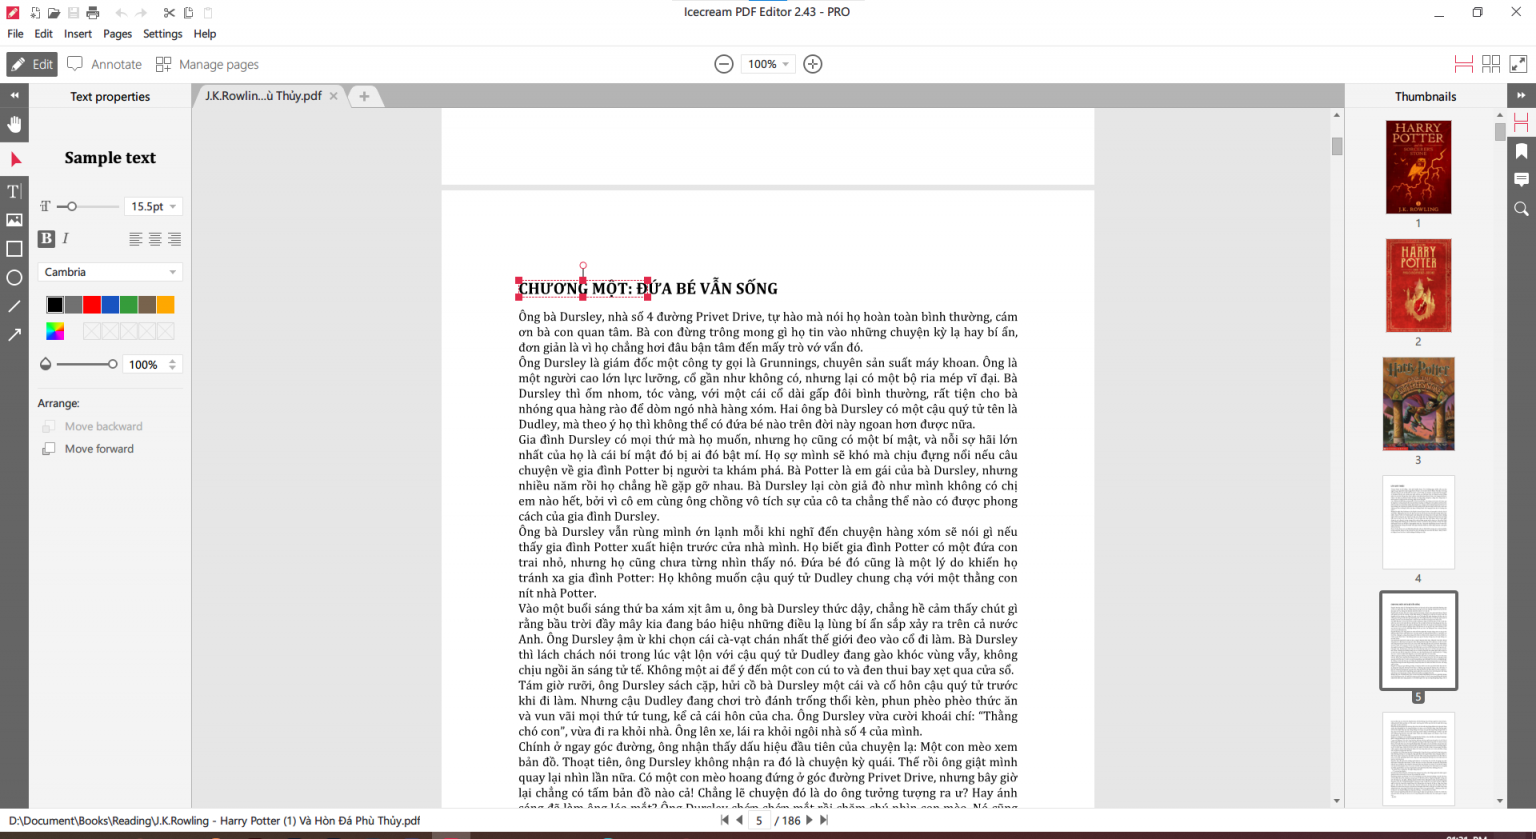 Icecream PDF Editor Pro 2.72 for mac download